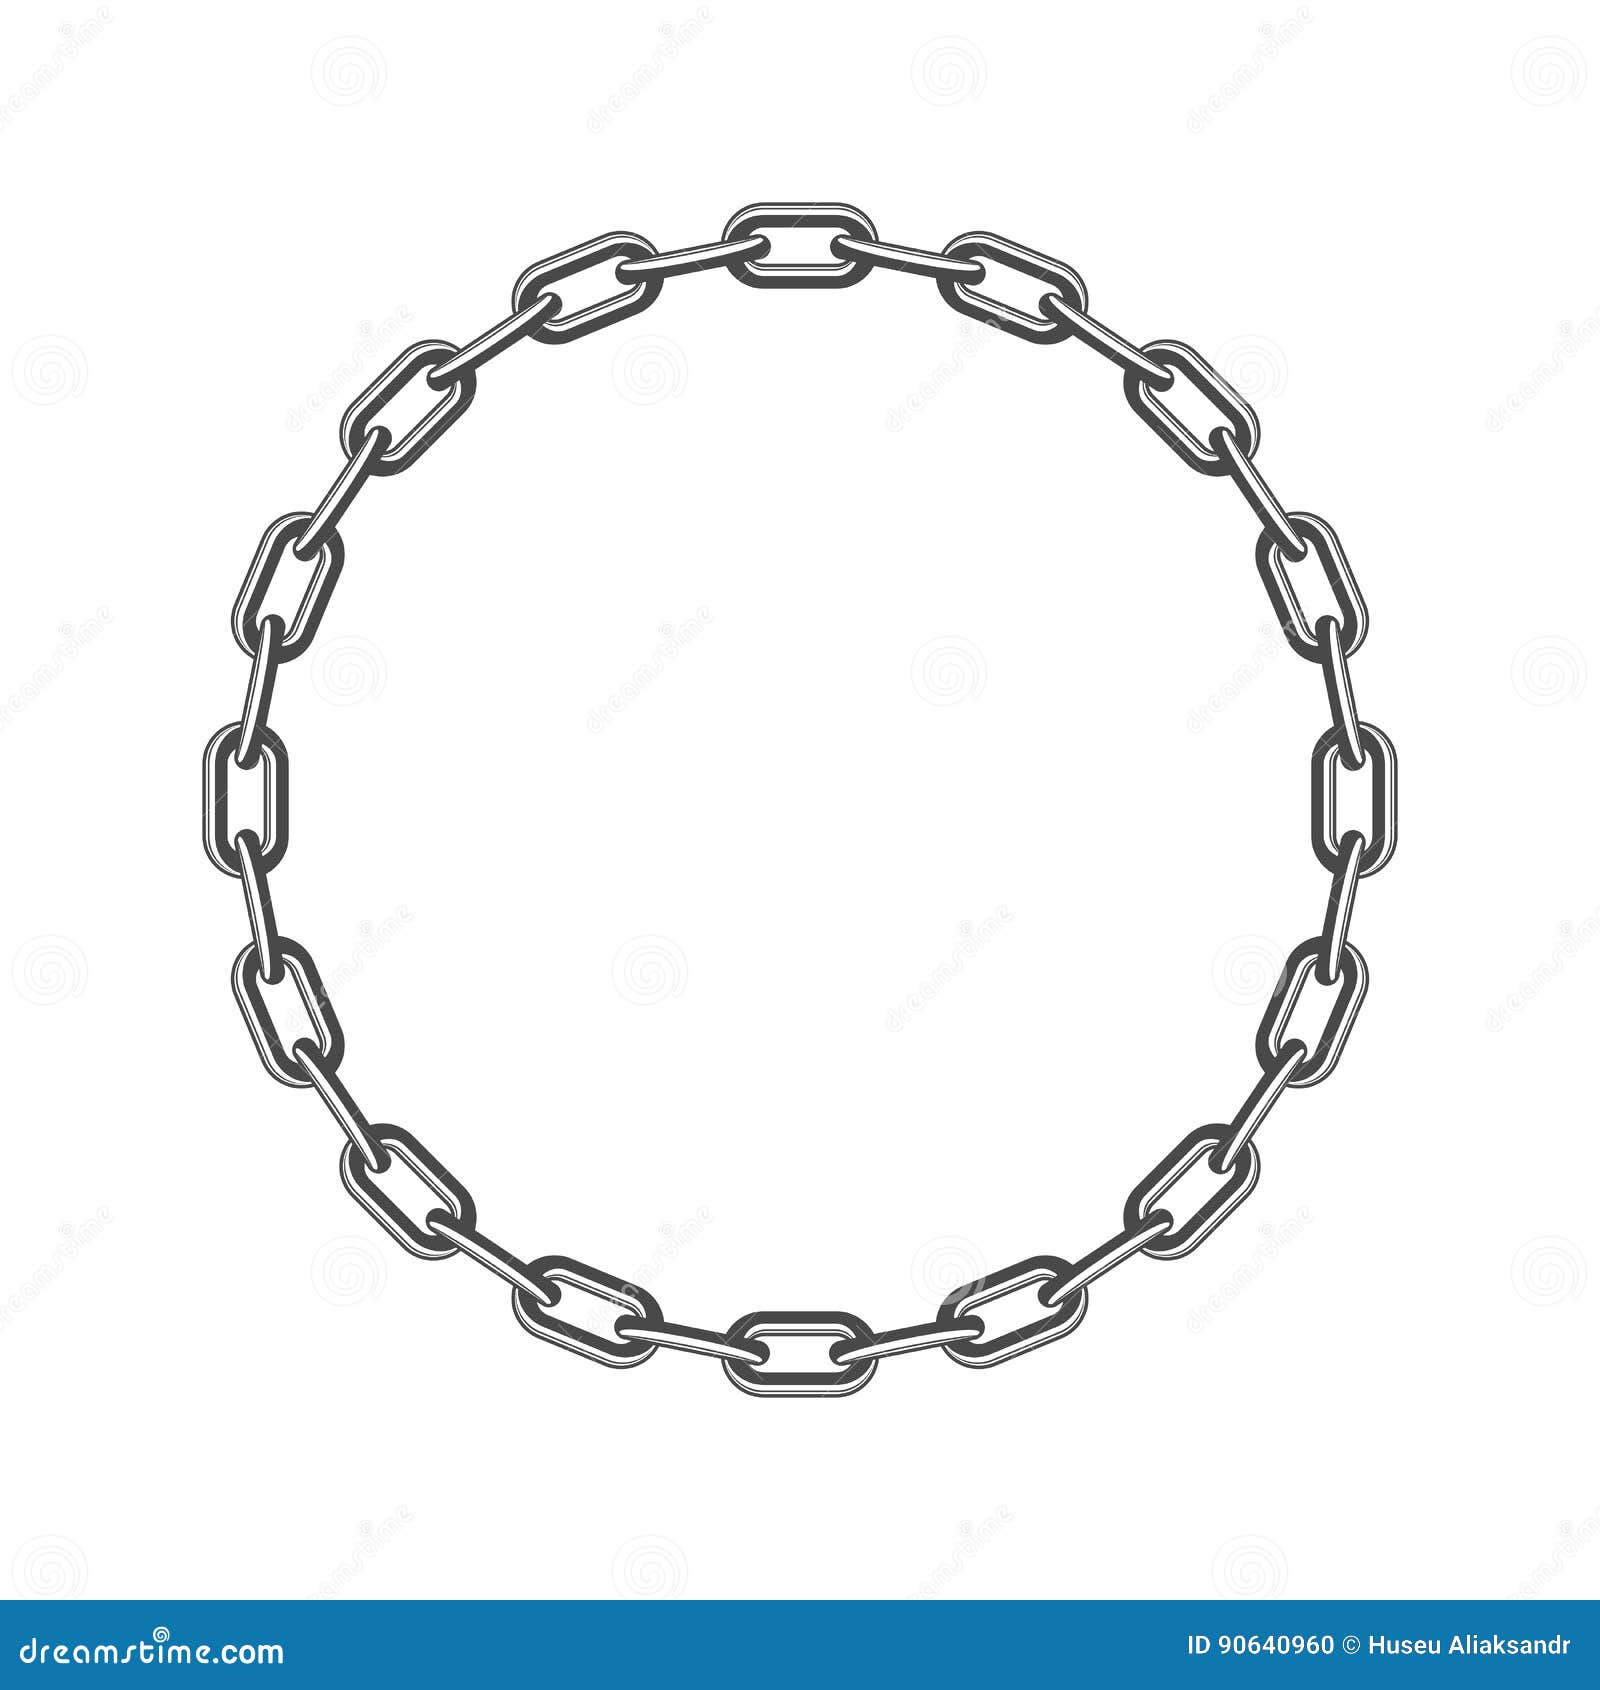 Black round chain. stock vector. Illustration of circle - 90640960